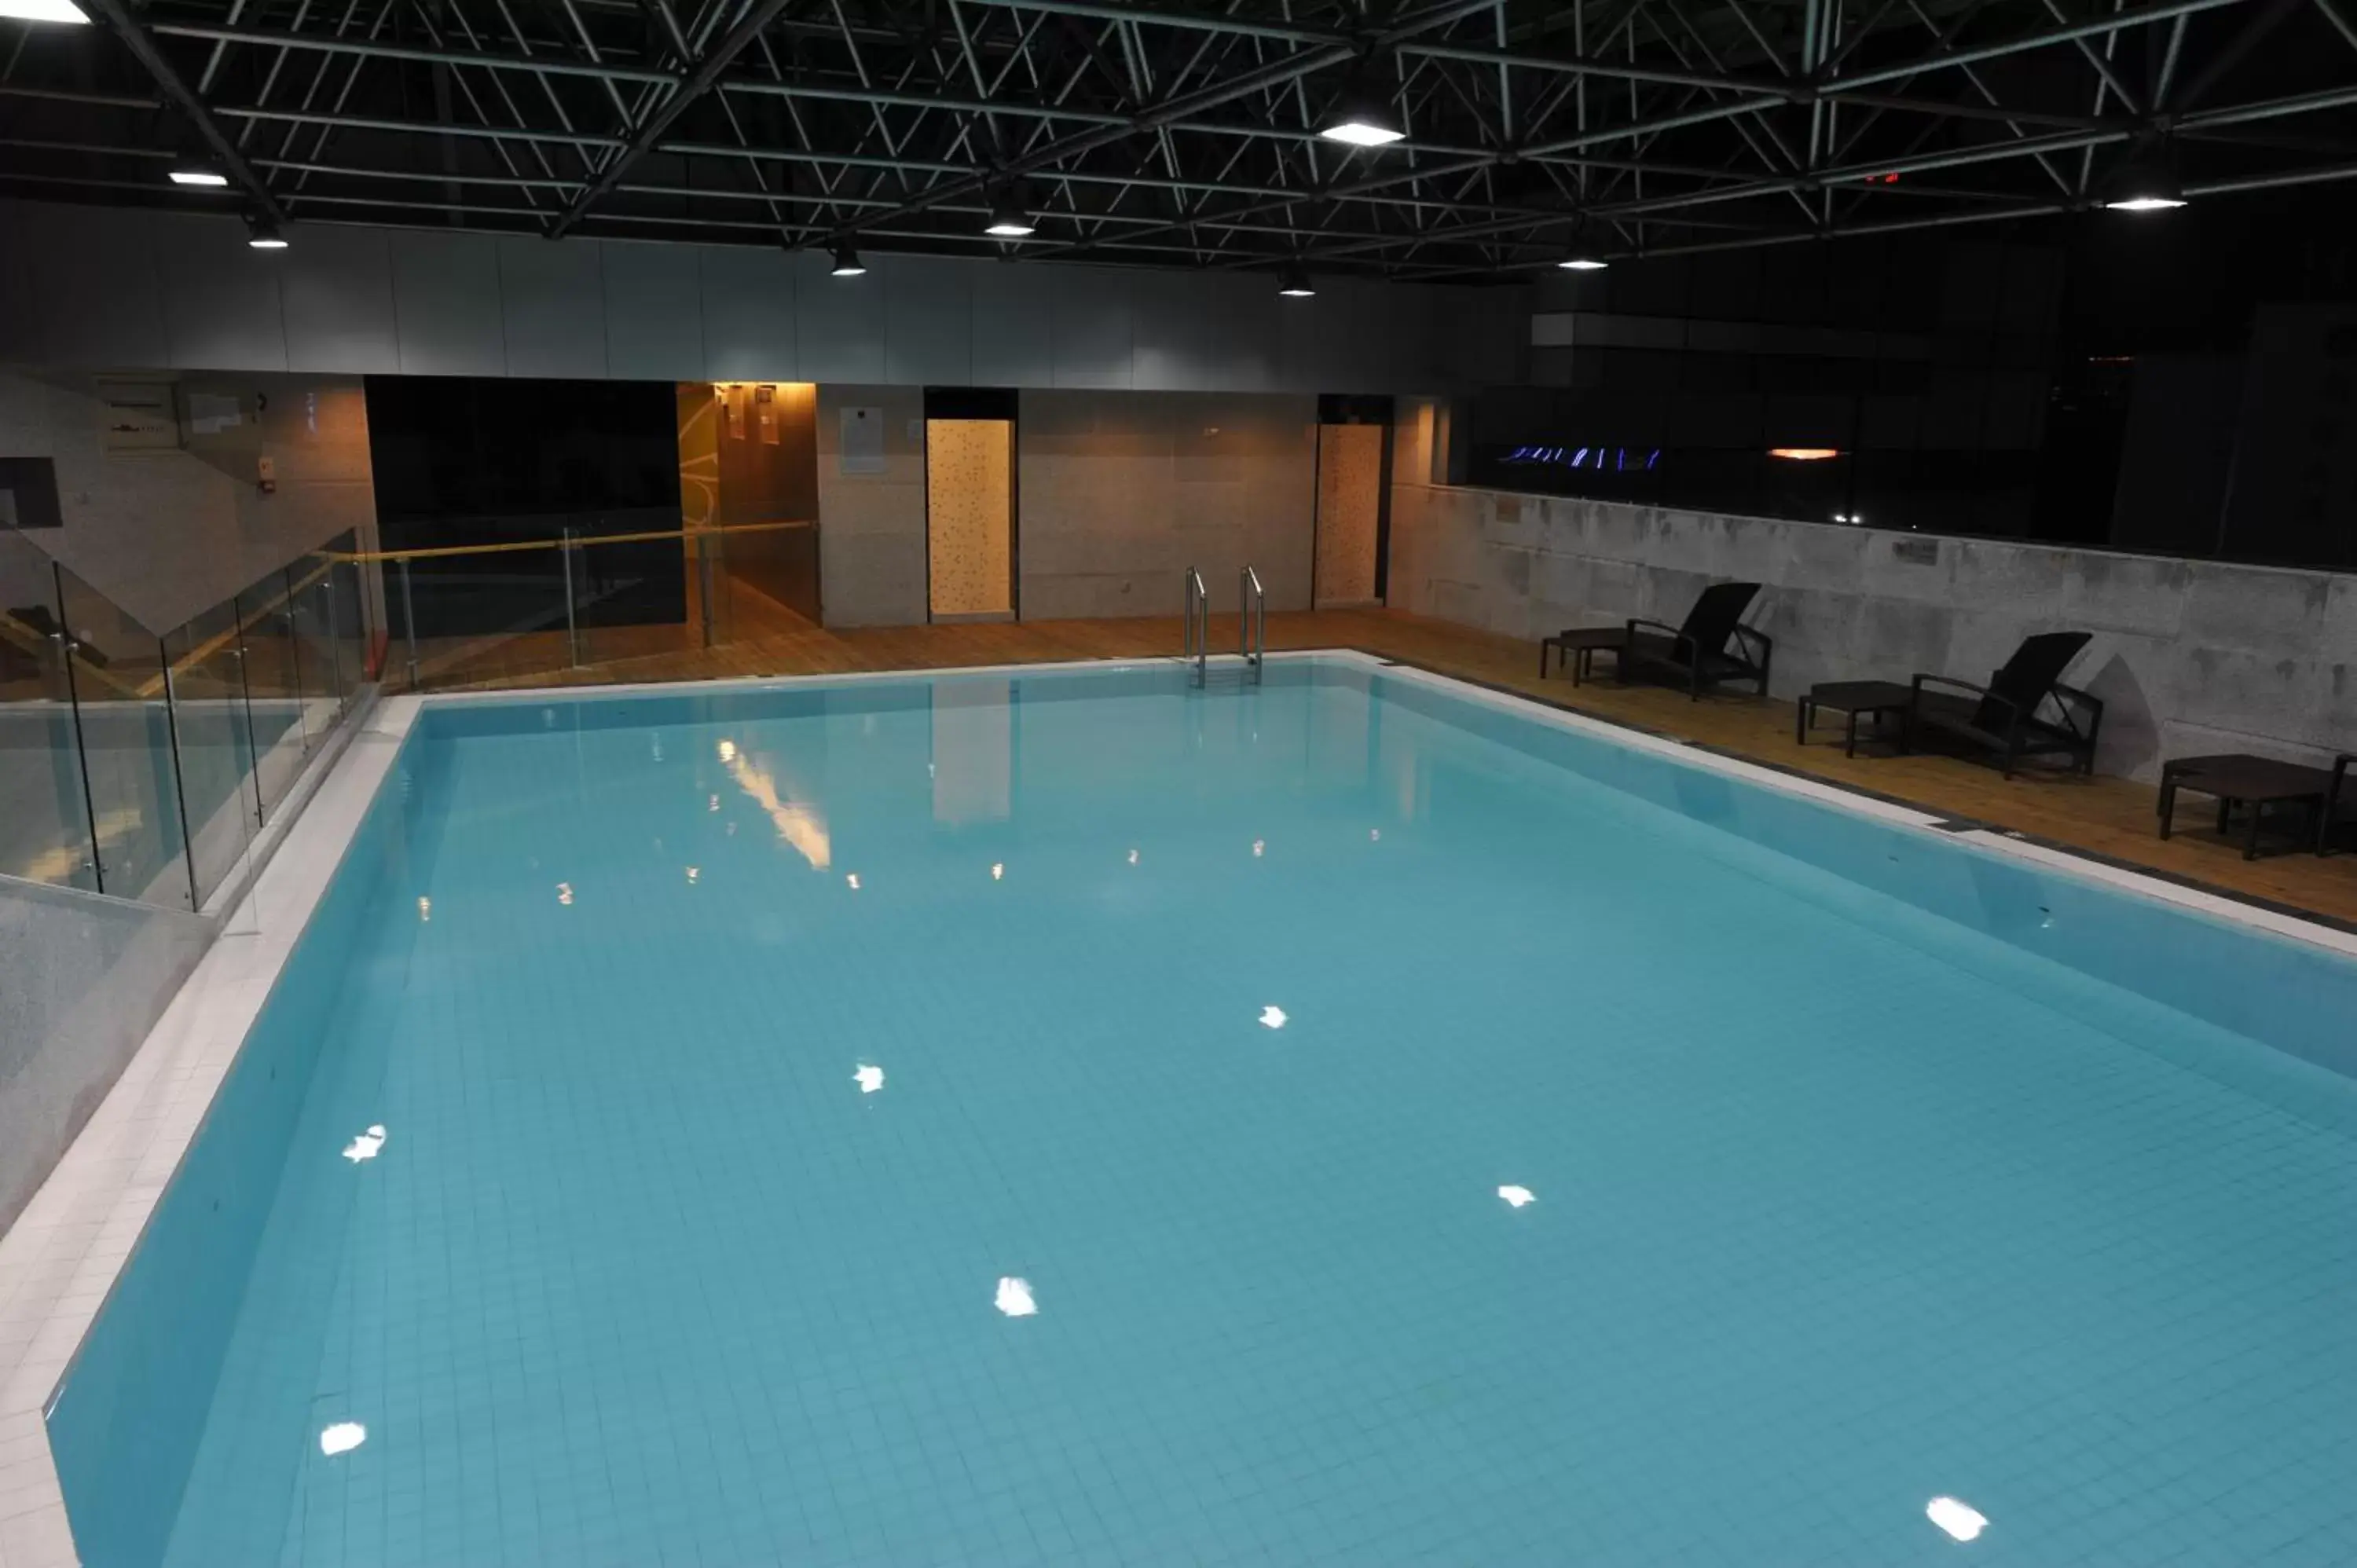 Swimming Pool in Shenzhen Novotel Watergate(Kingkey 100)